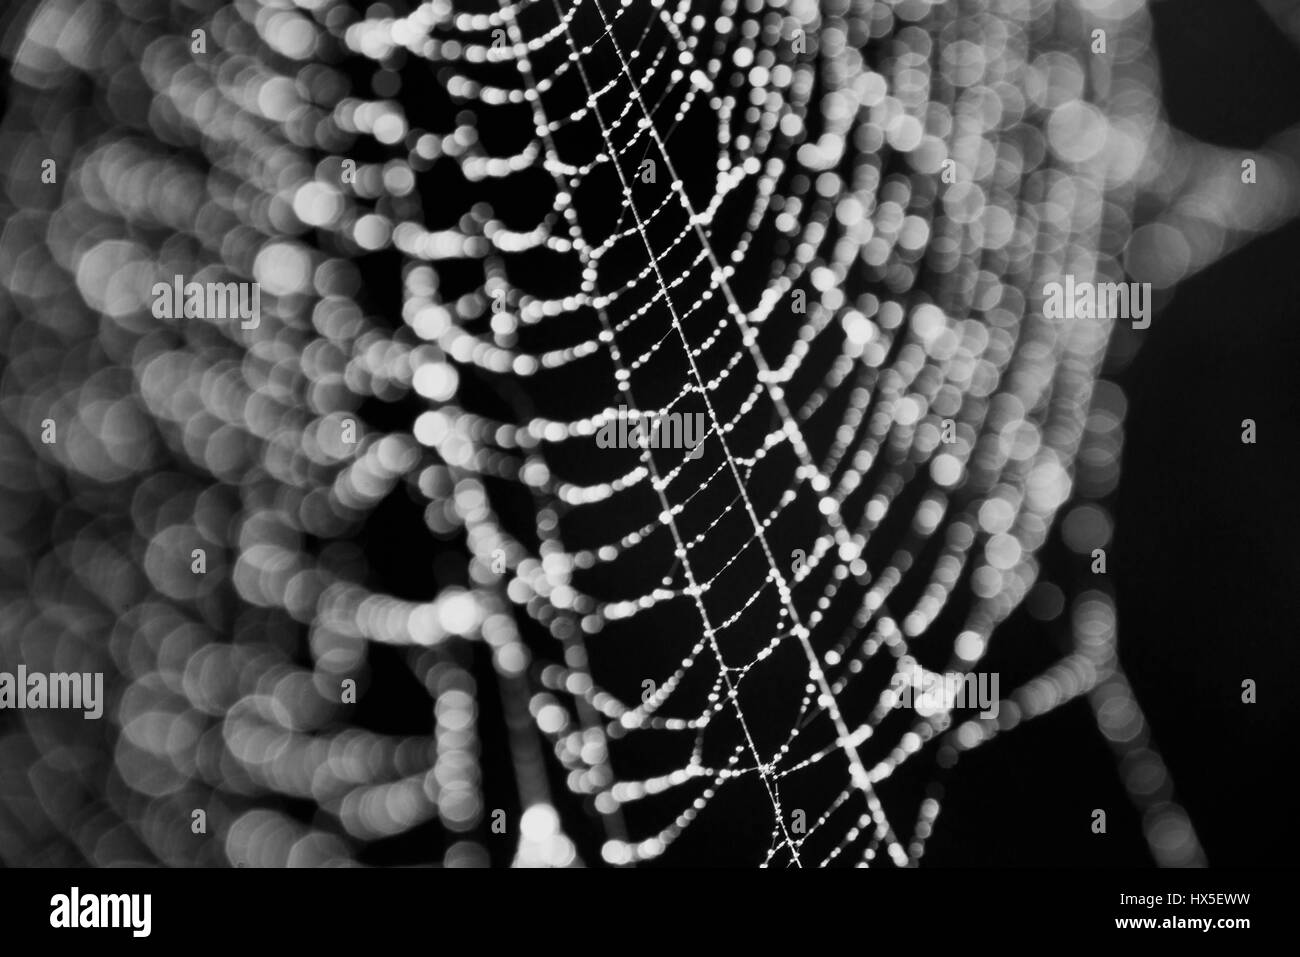 Close-up of a spider's web Banque D'Images